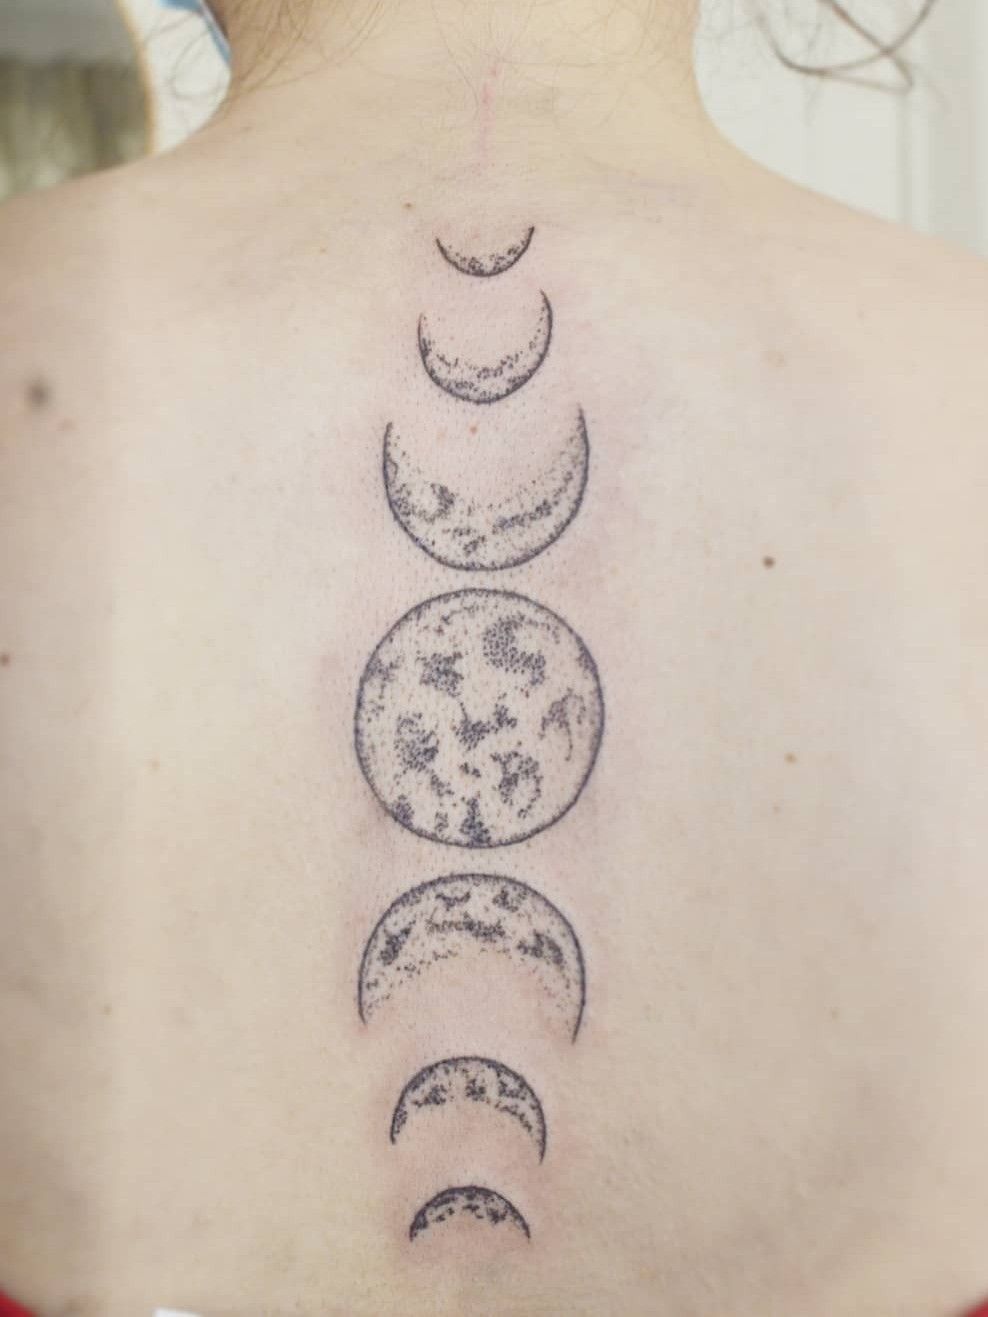 65 Moon Tattoo Design Ideas For Women To Enhance Your Beauty - Blurmark | Moon  tattoo designs, Small moon tattoos, Tattoos